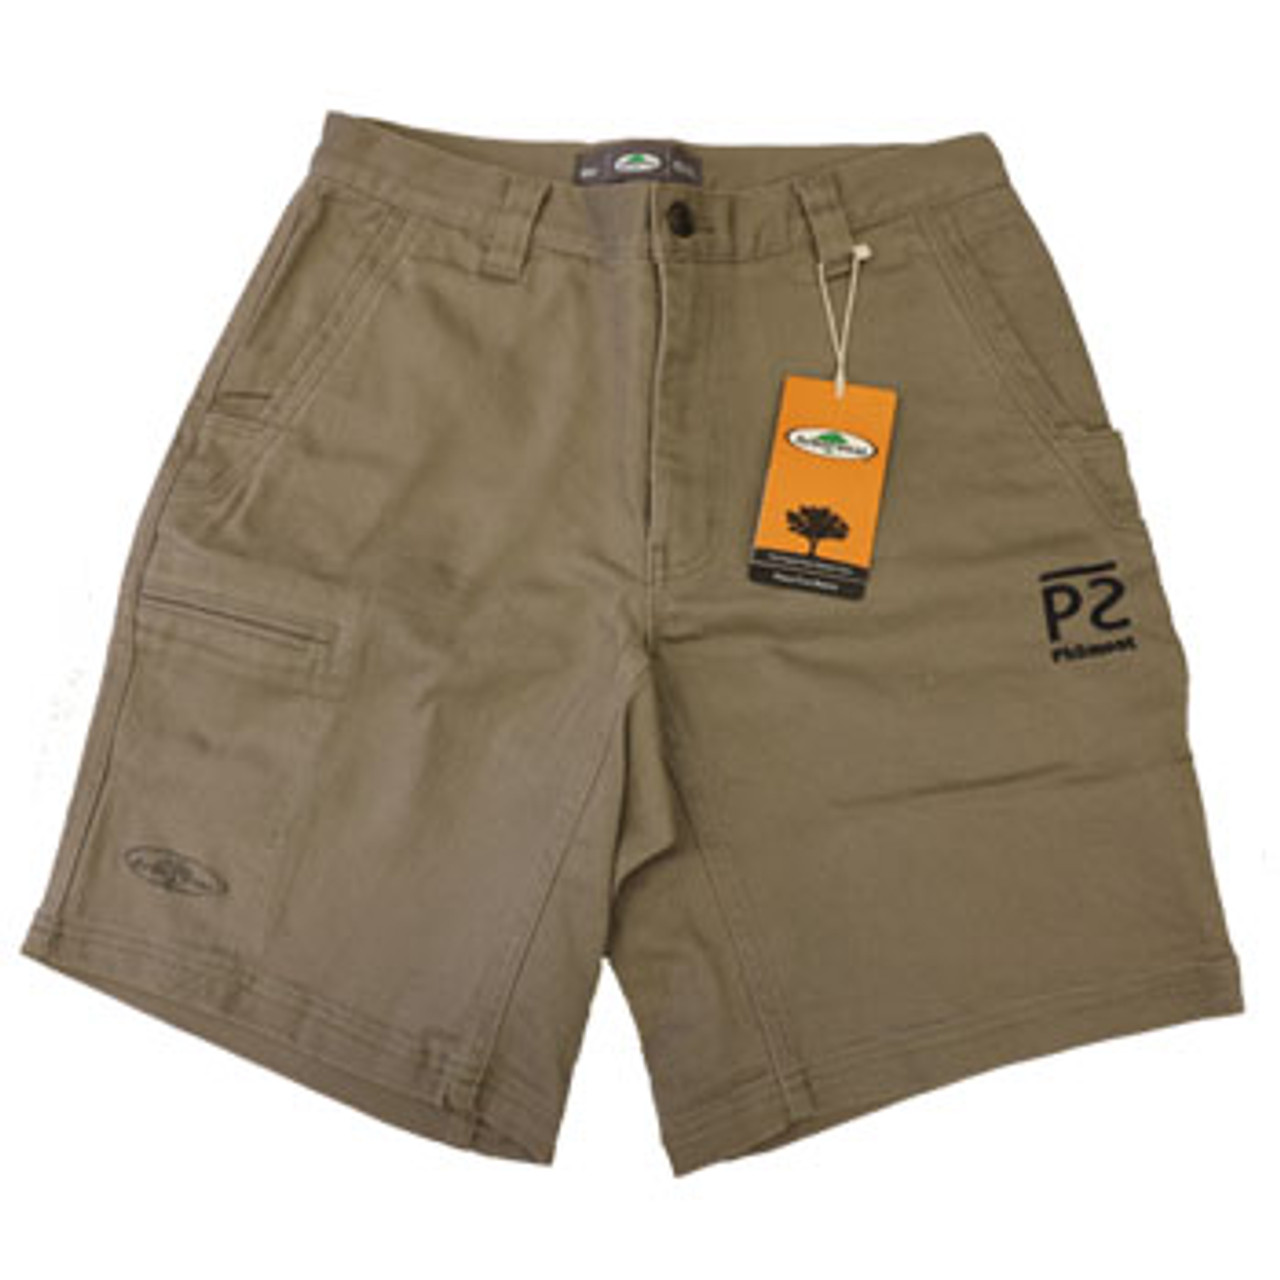 Portage Flex Pants - Arborwear